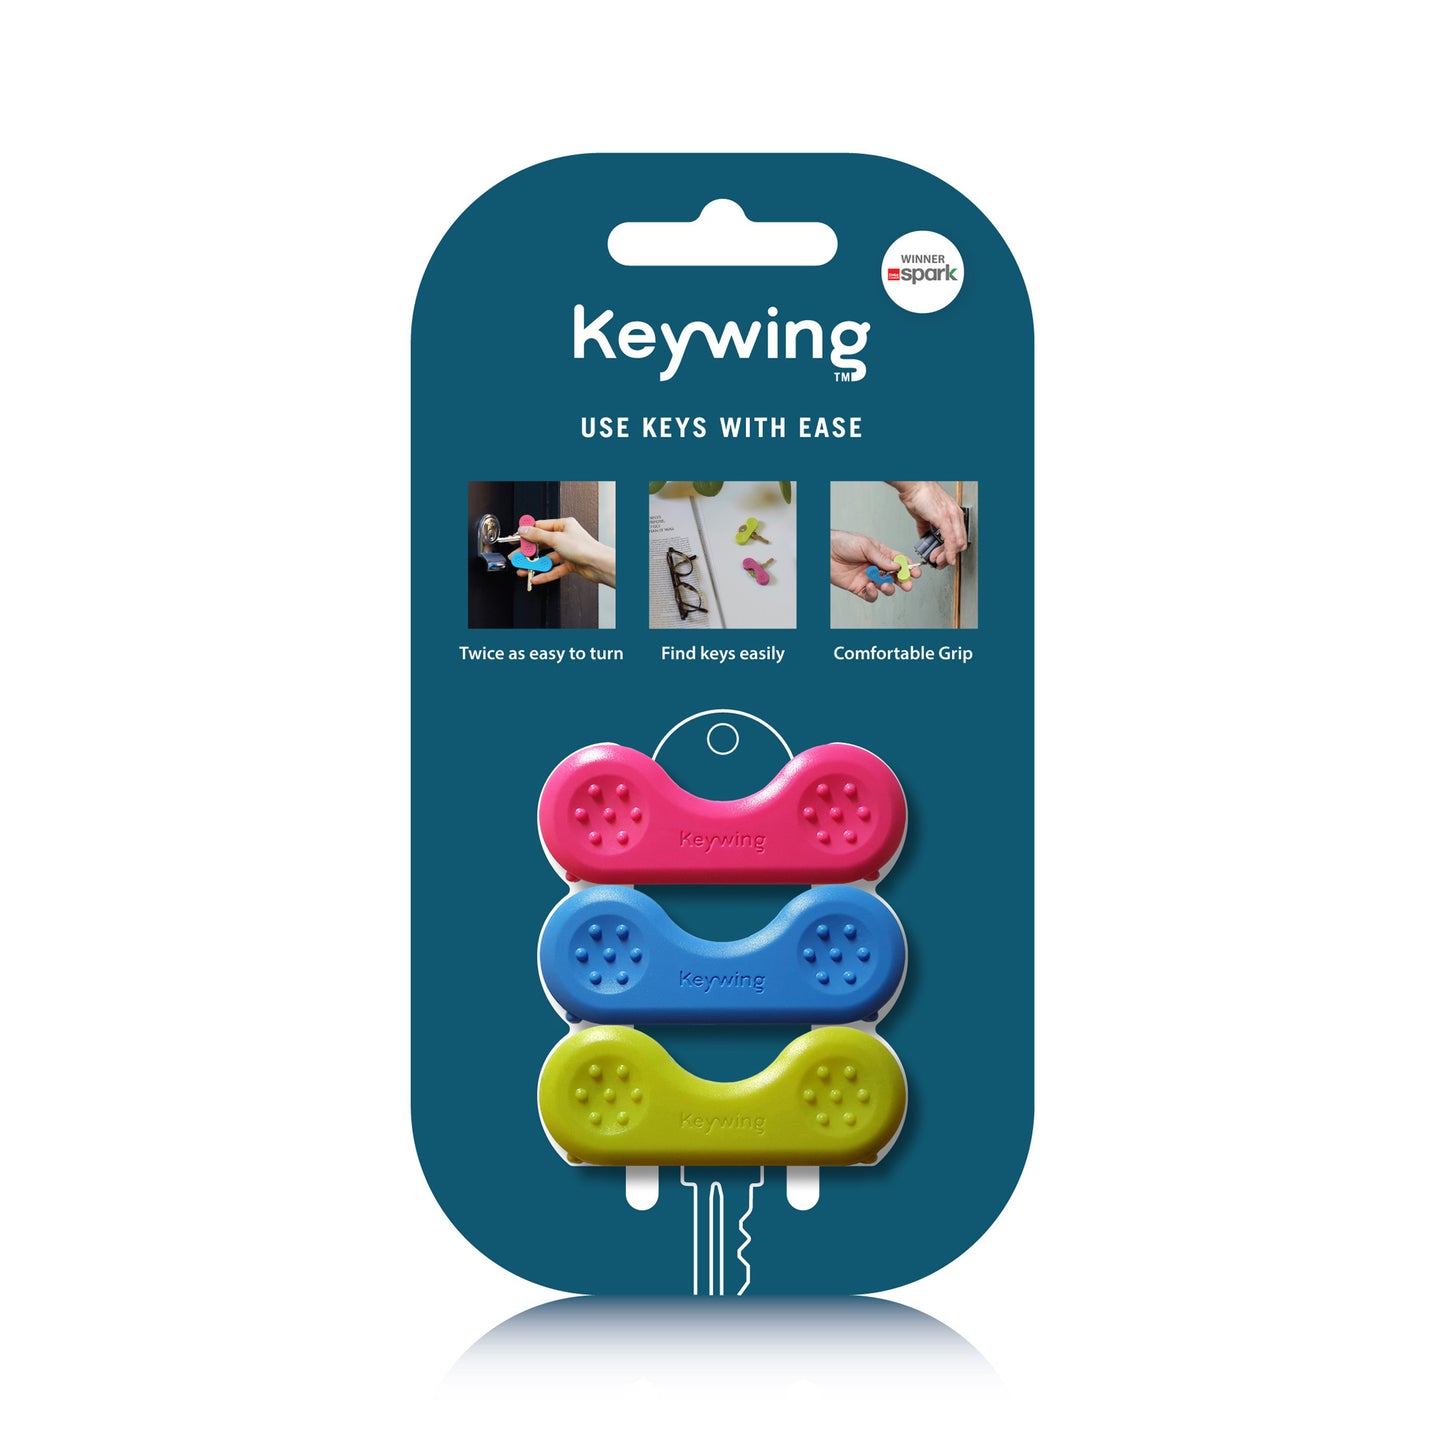 Keywing - The Key Turner